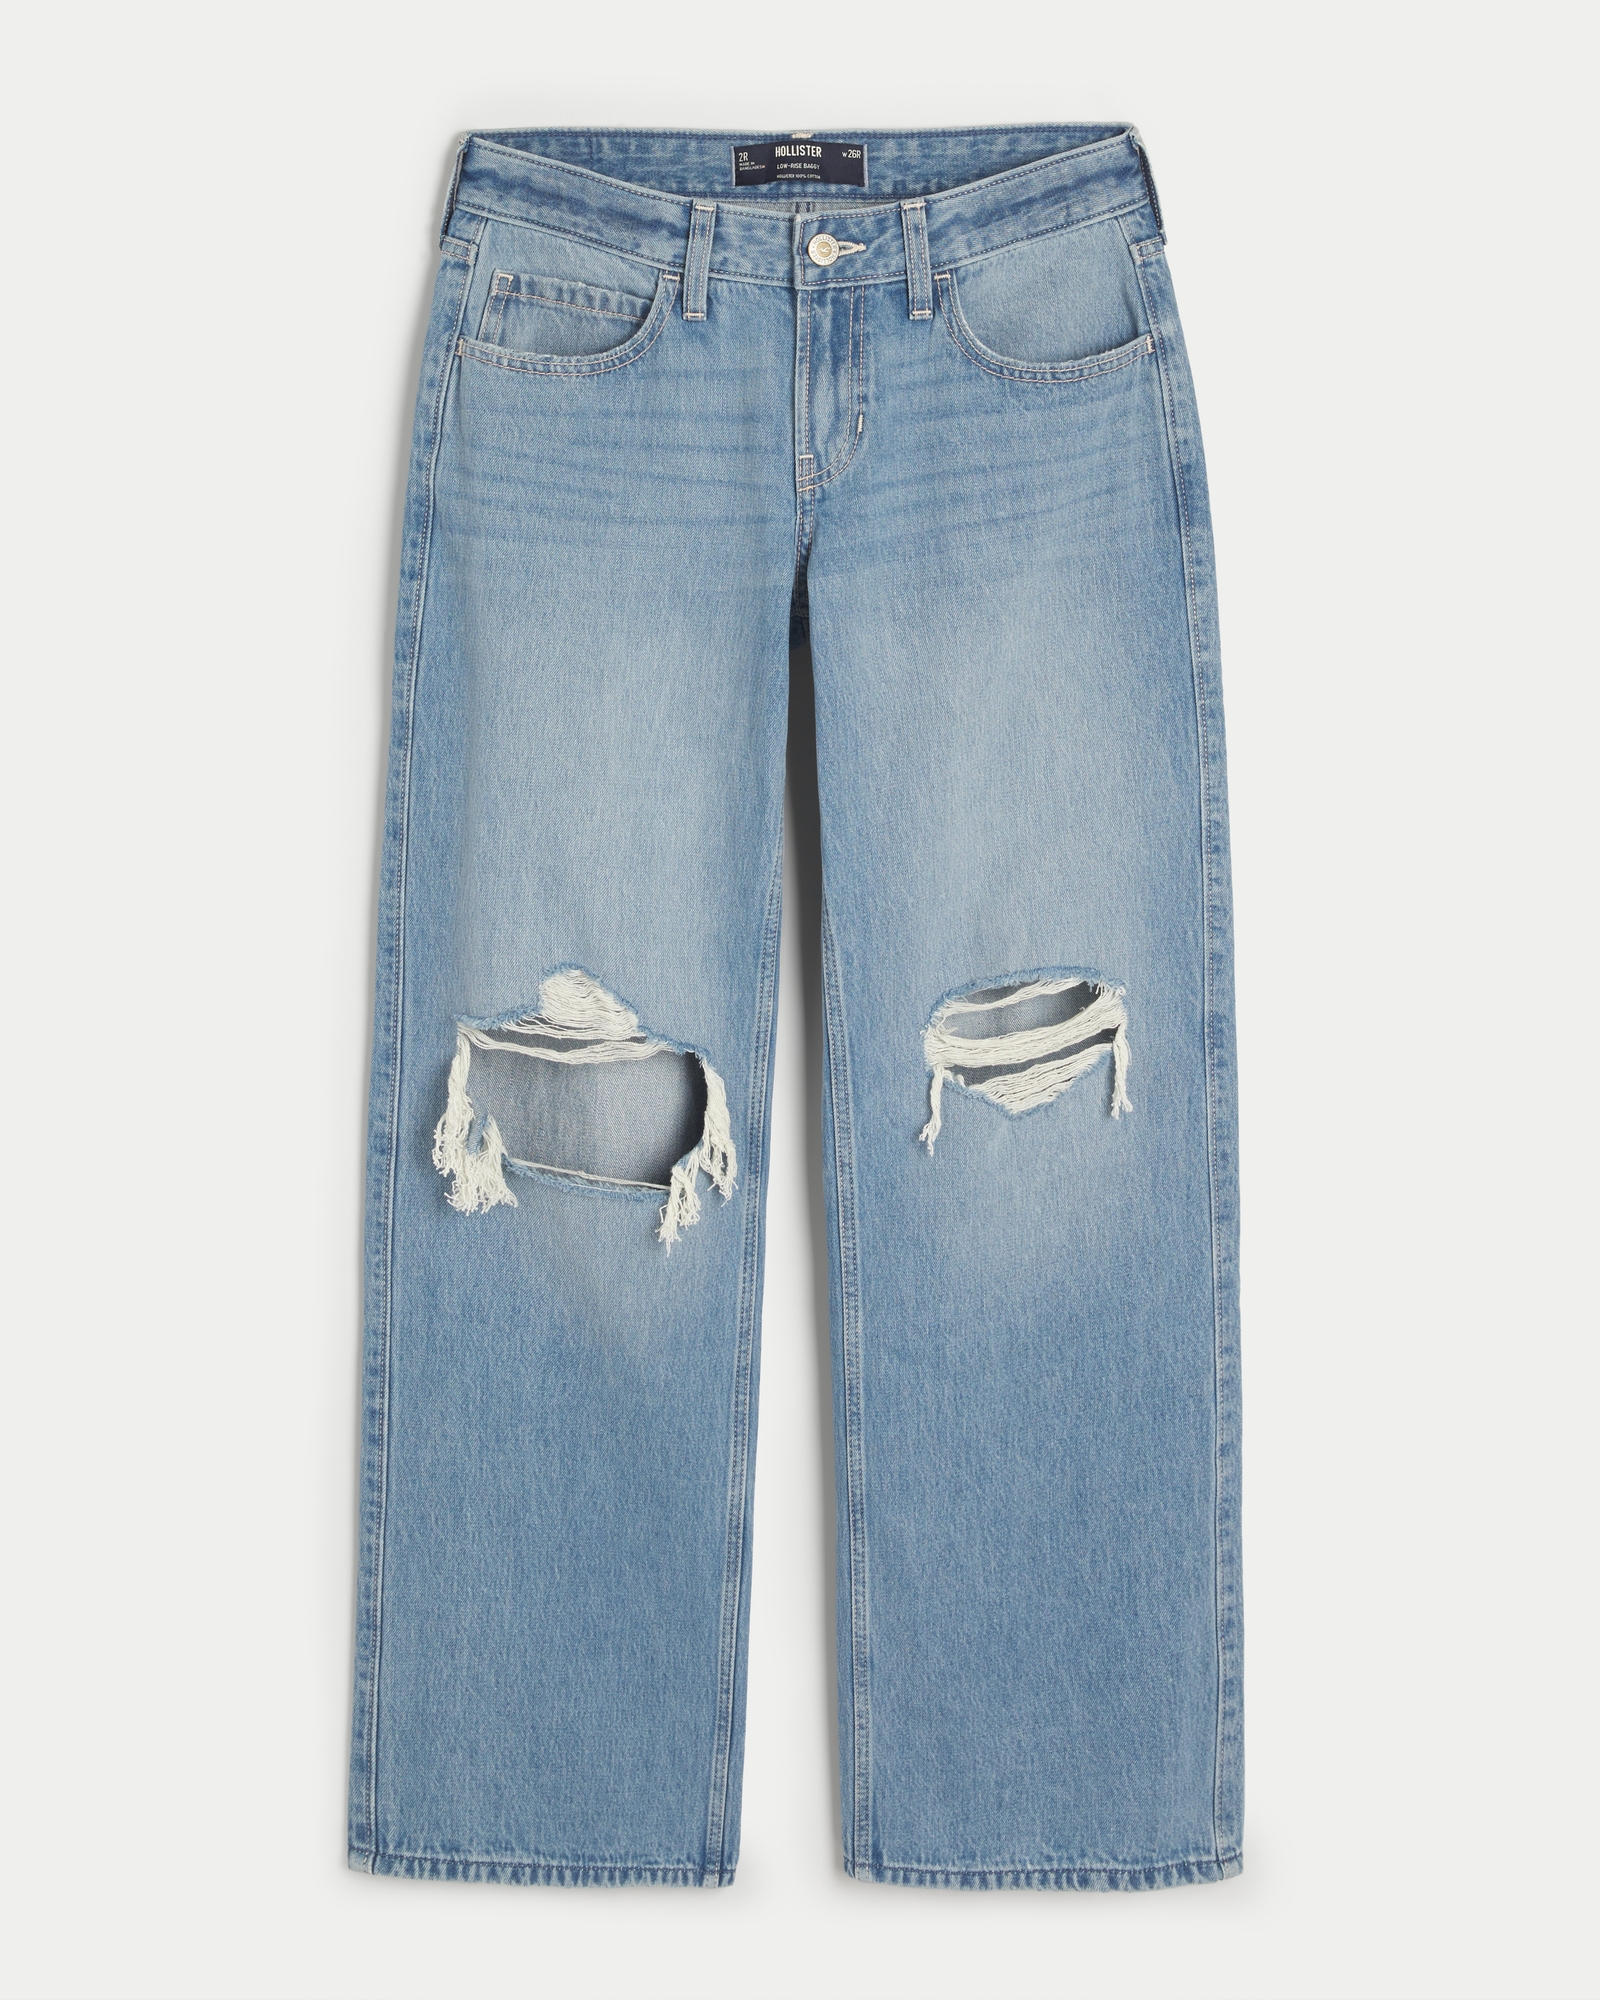 Hollister Women's Jeans Size 28x32 Low Rise Light Wash Front Pocket Nice  Jeans